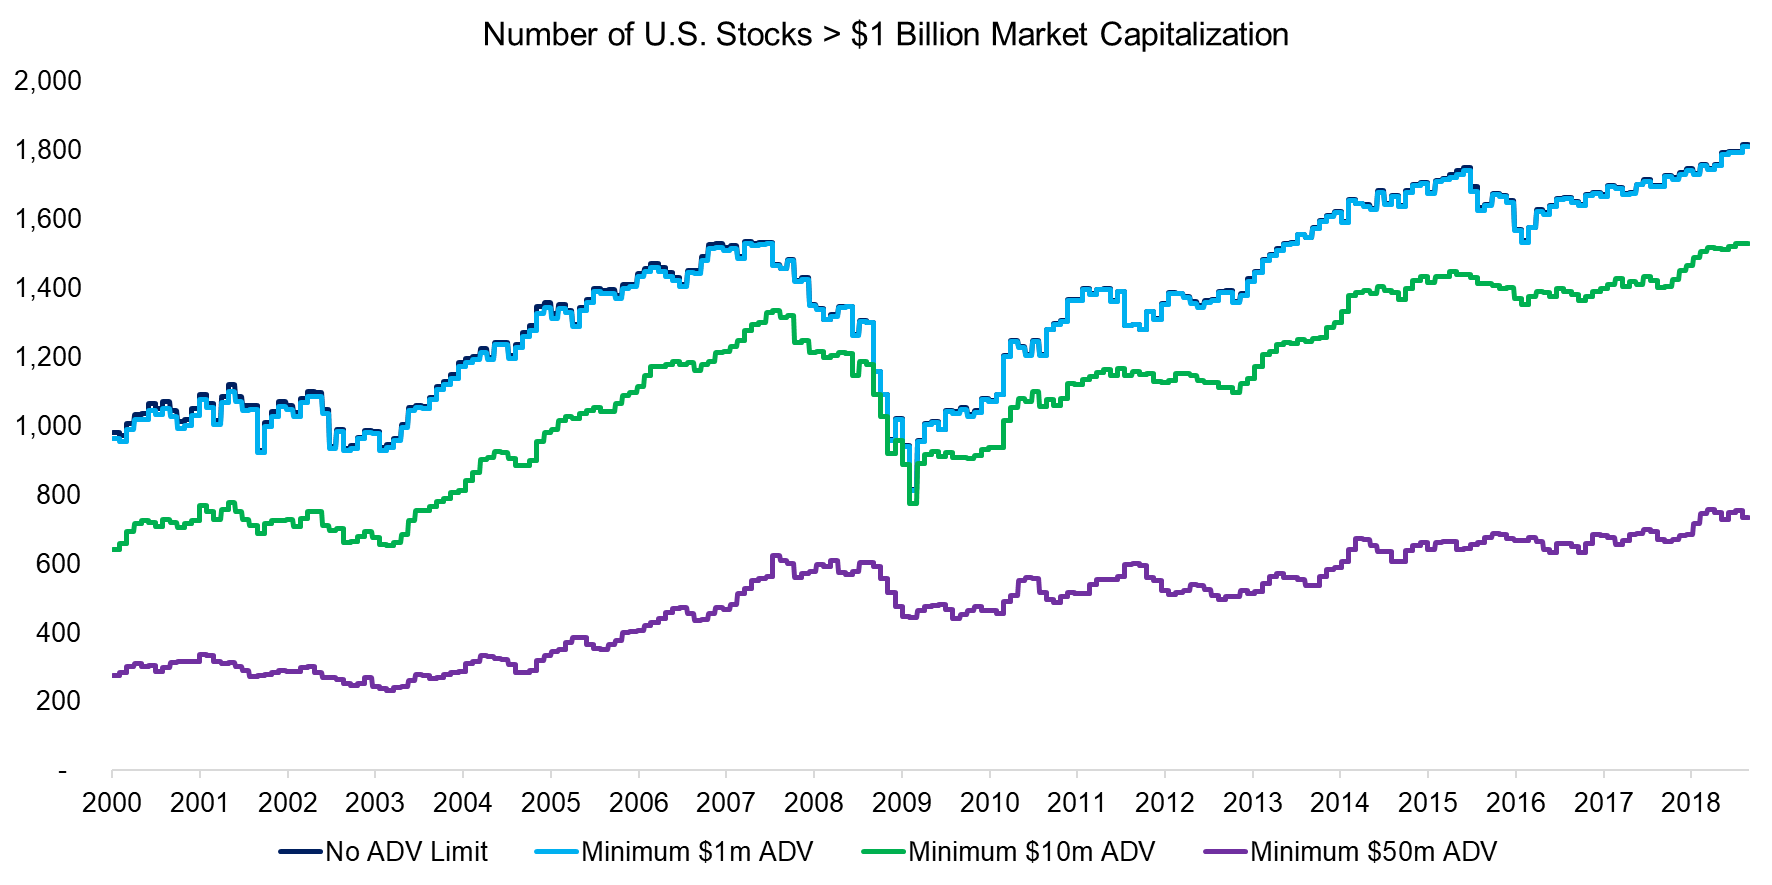 Number of U.S. Stocks $1 Billion Market Capitalization